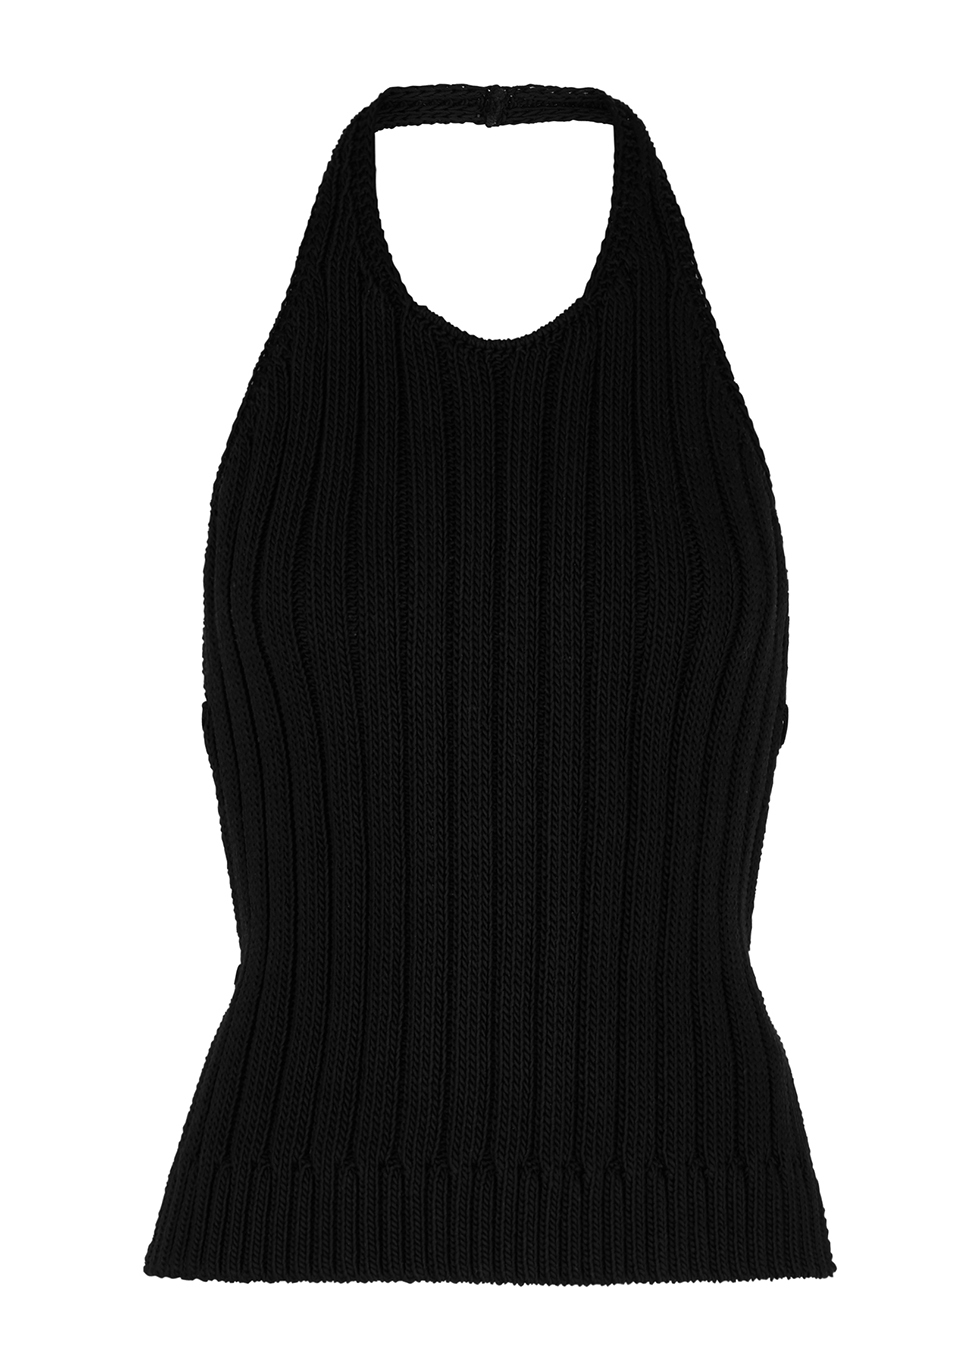 Harvey Nichols Women Clothing Tops Backless Tops Sesto black open-back cotton-blend top 